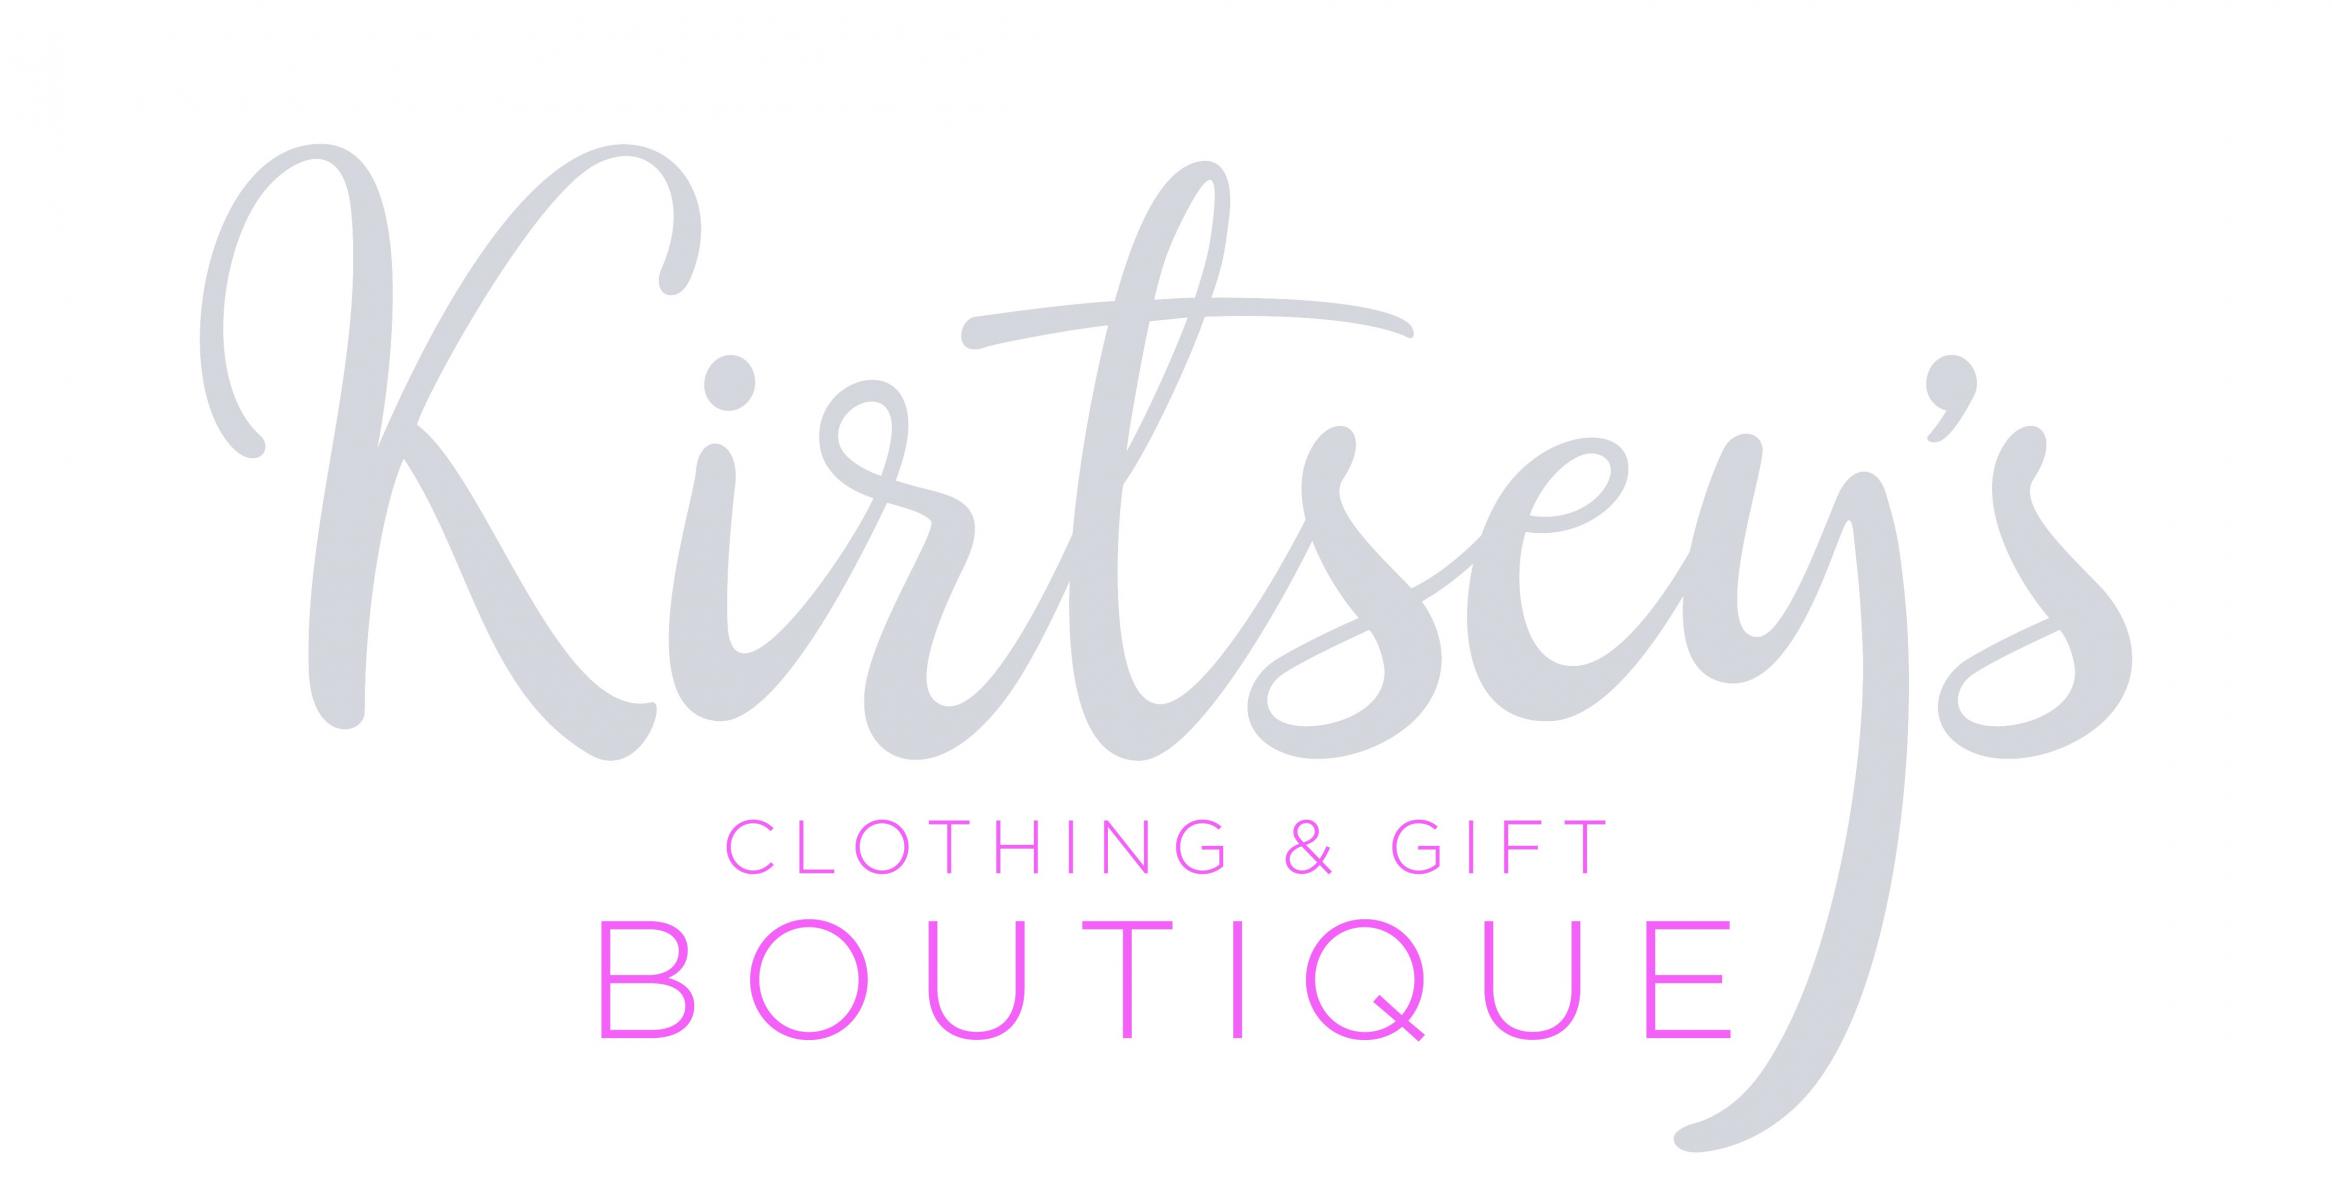 Kirtsey's Clothing & Gift Boutique's Image